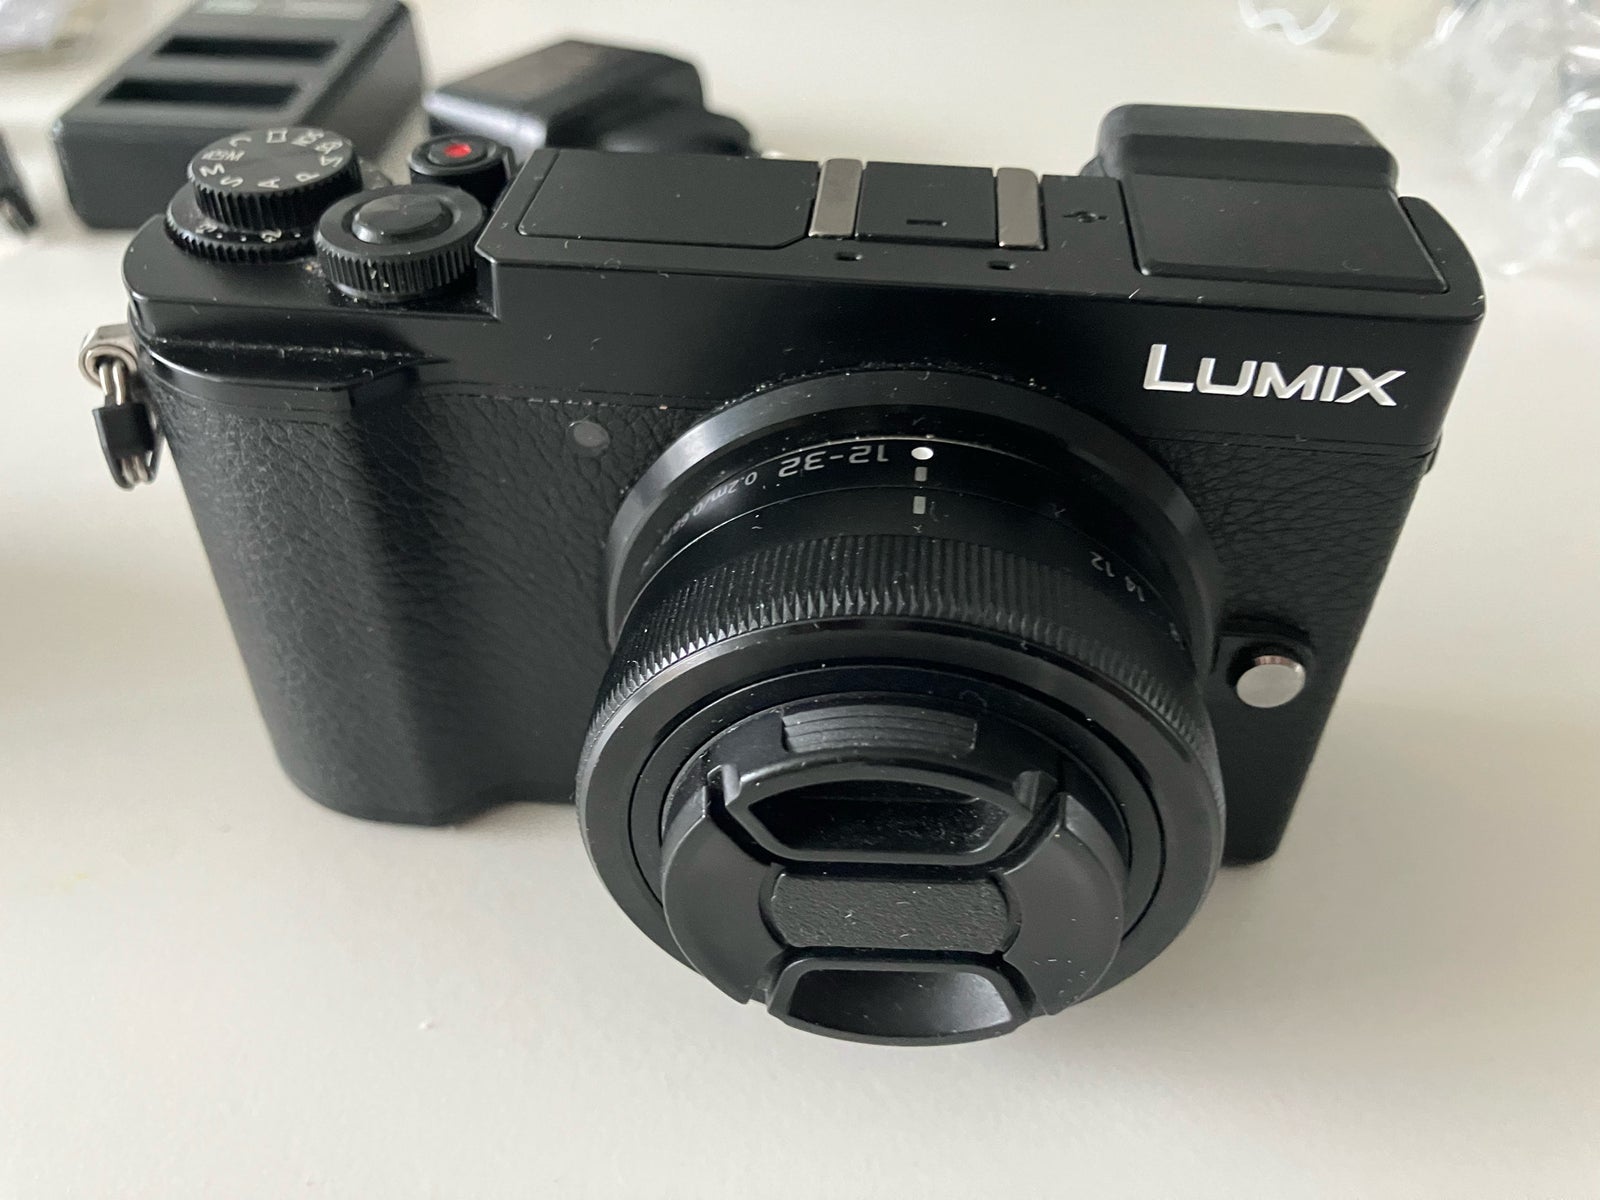 Lumix, Panasonic DC-GX9, 20 megapixels